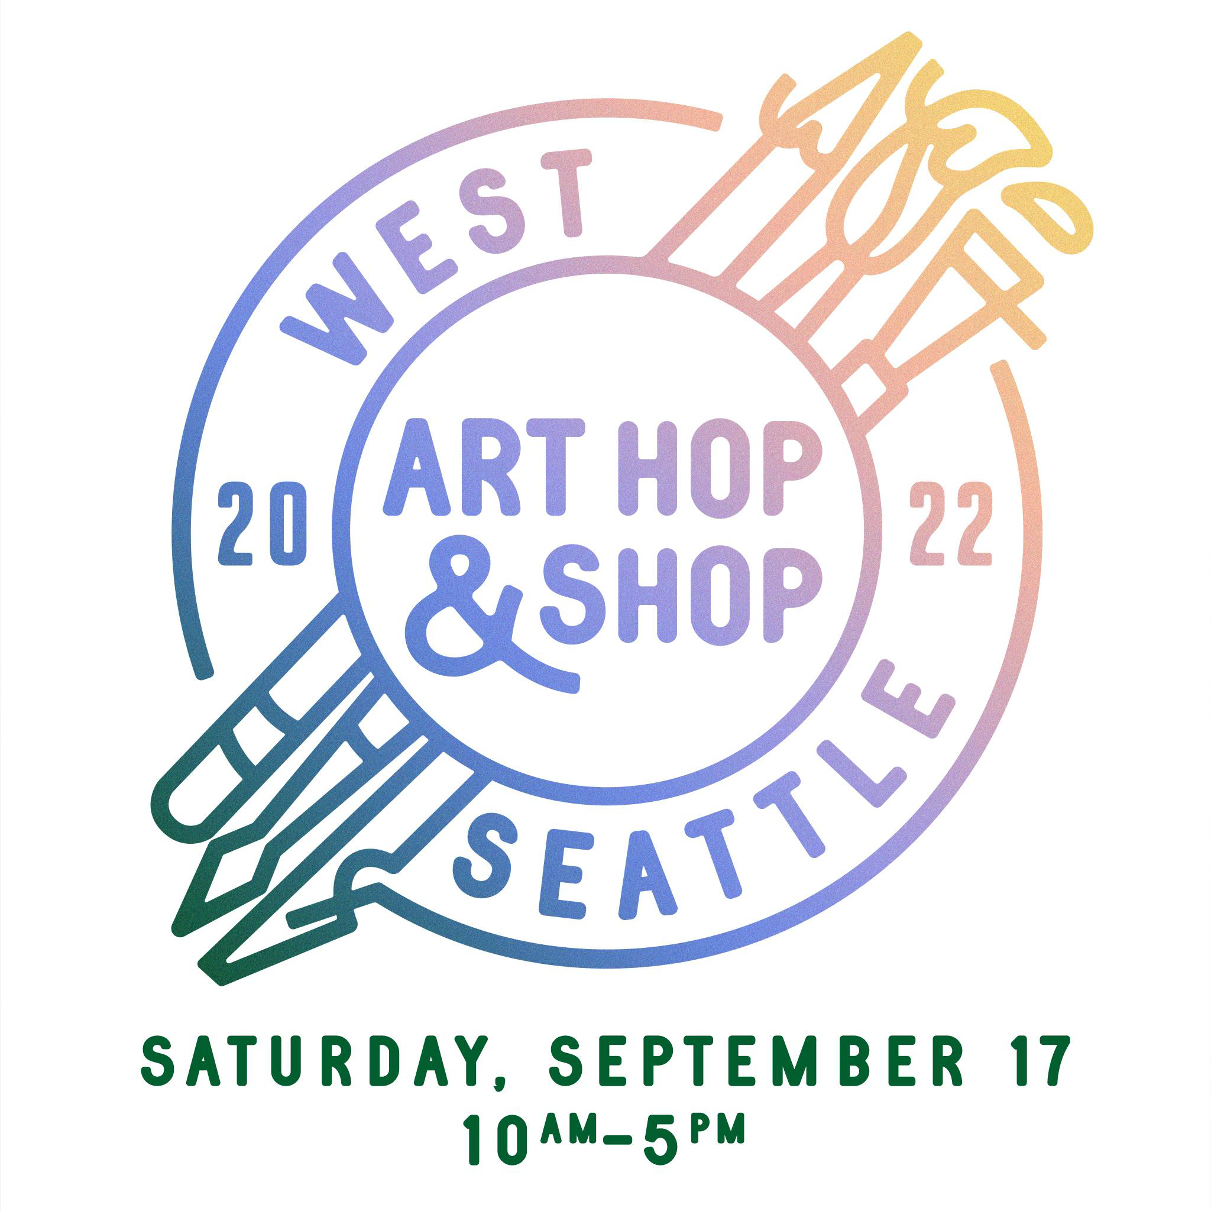 West Seattle Art Hop & Shop will feature more than 75 artists Sept. 17